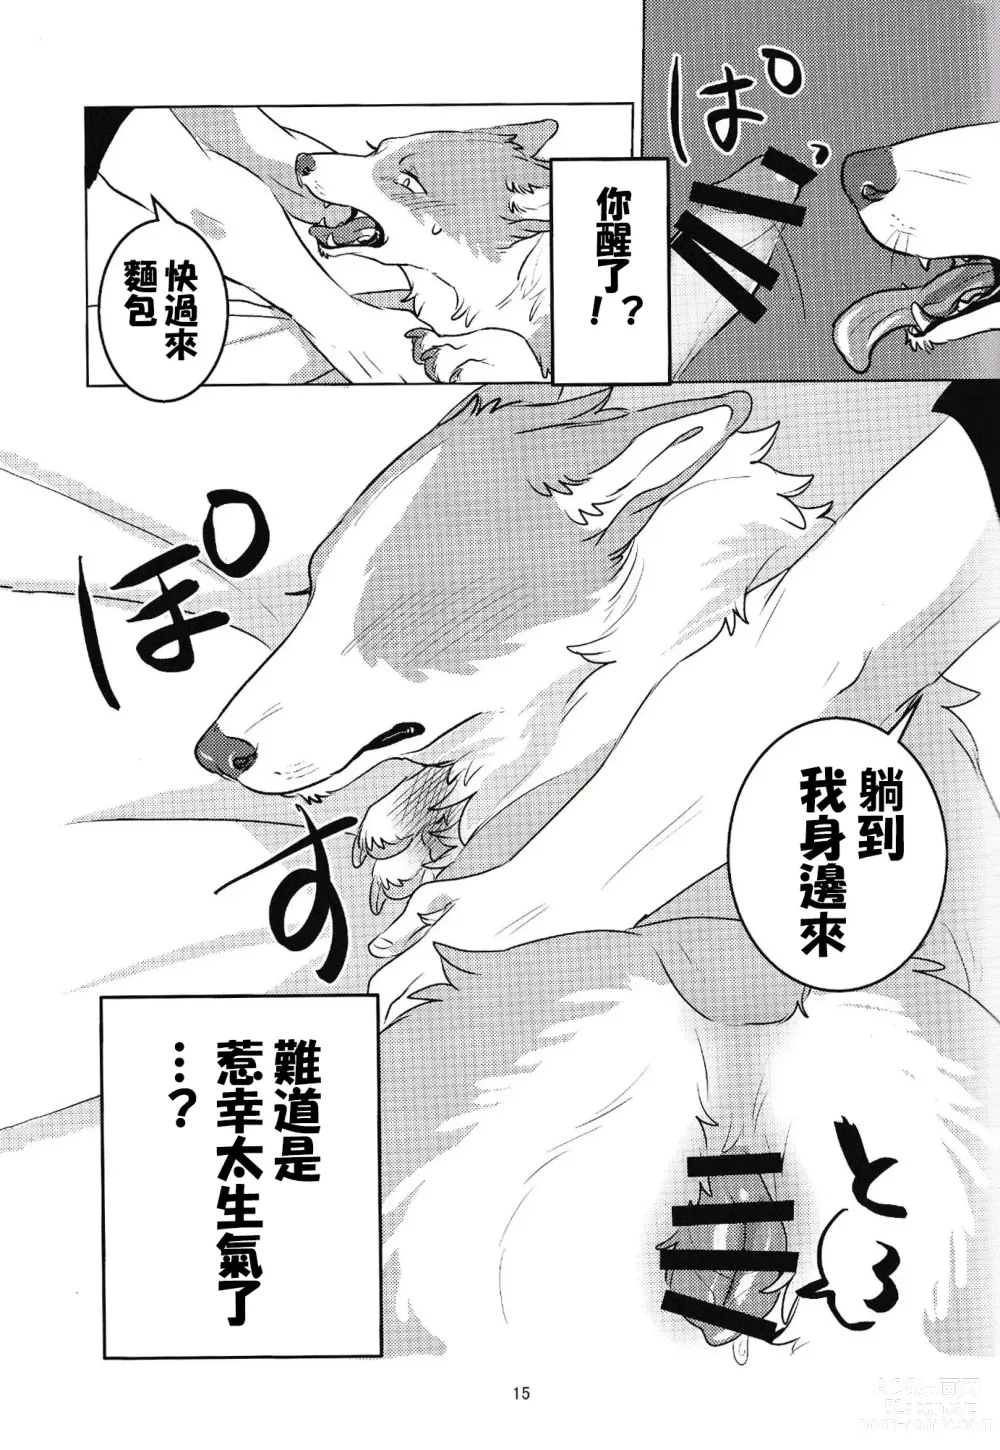 Page 14 of doujinshi 魅惑のパン